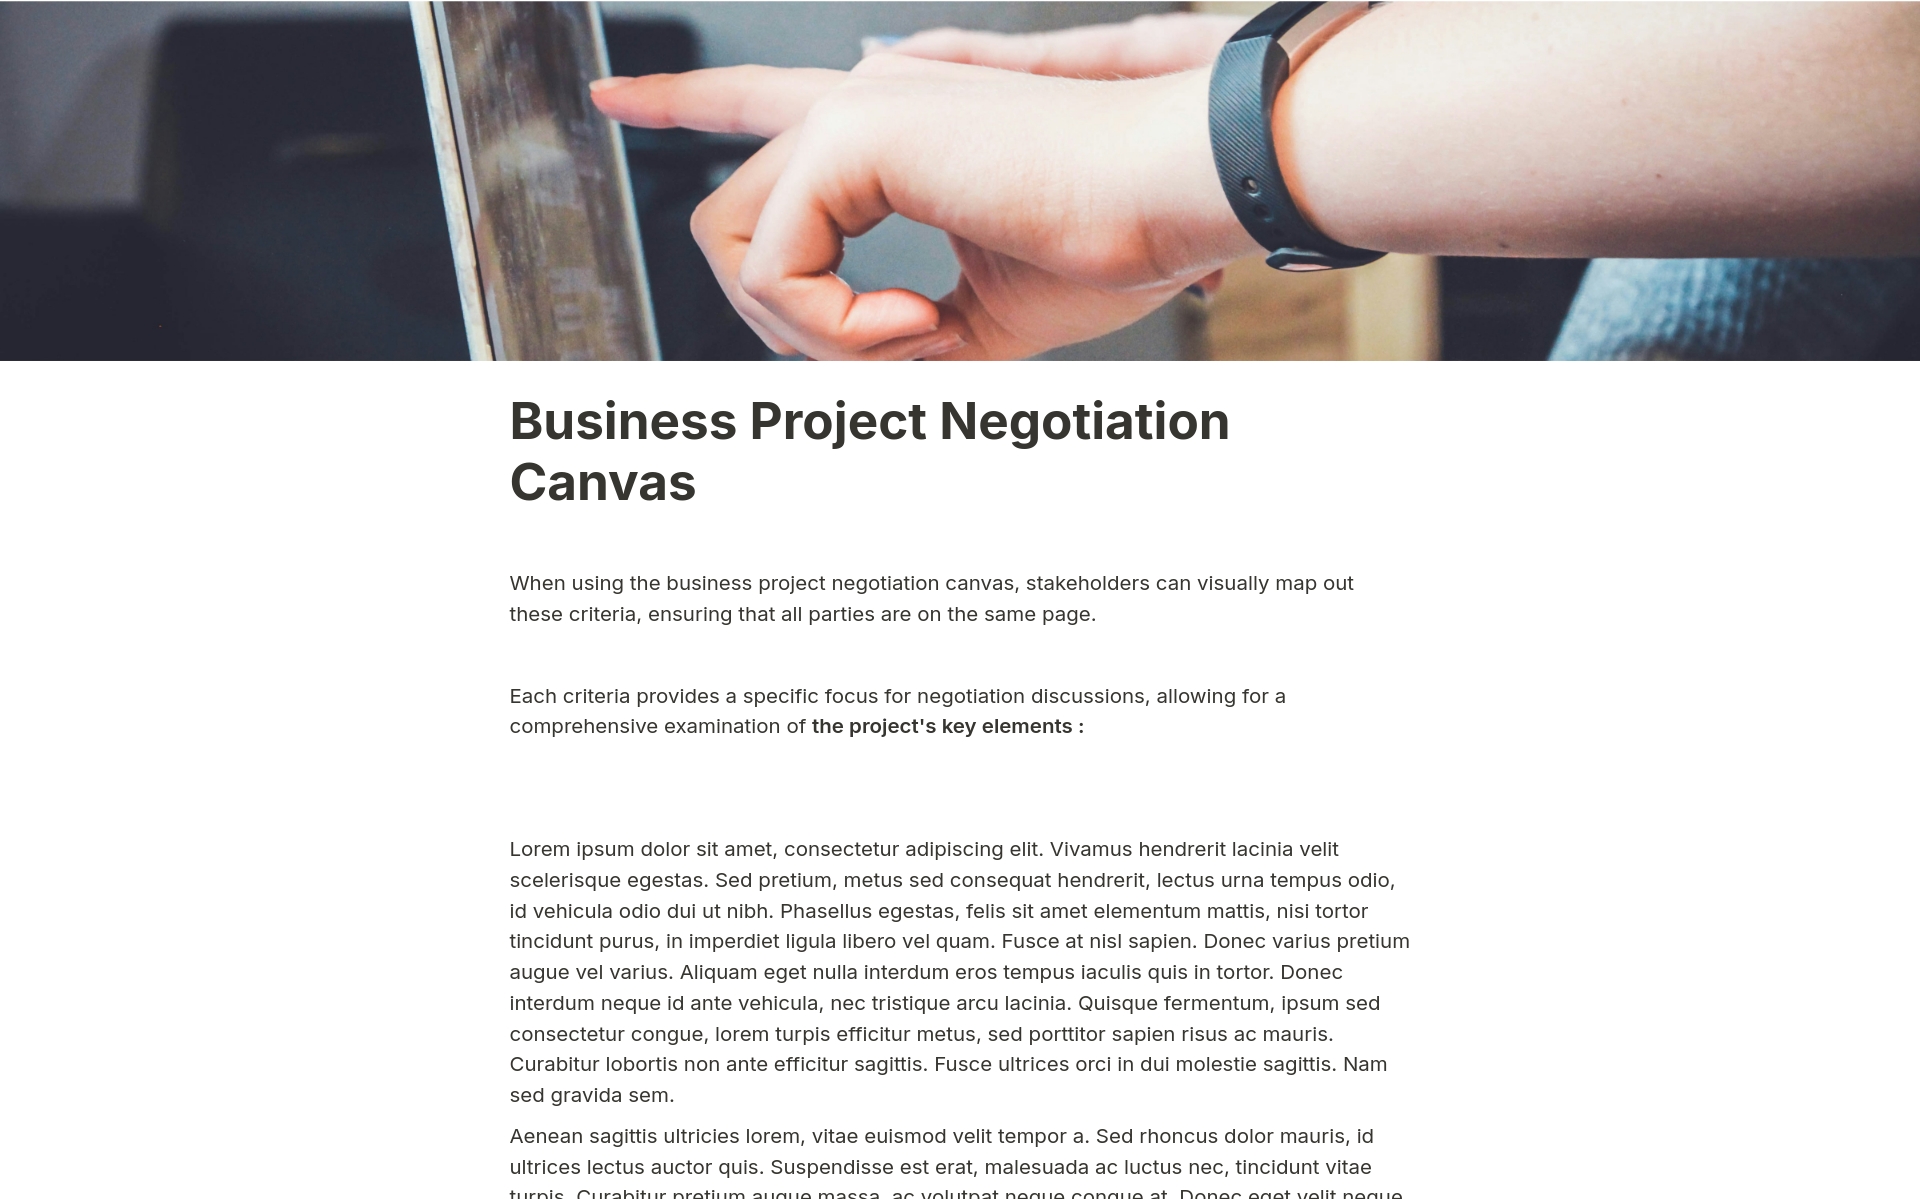 Vista previa de una plantilla para Business Project Negotiation Canvas